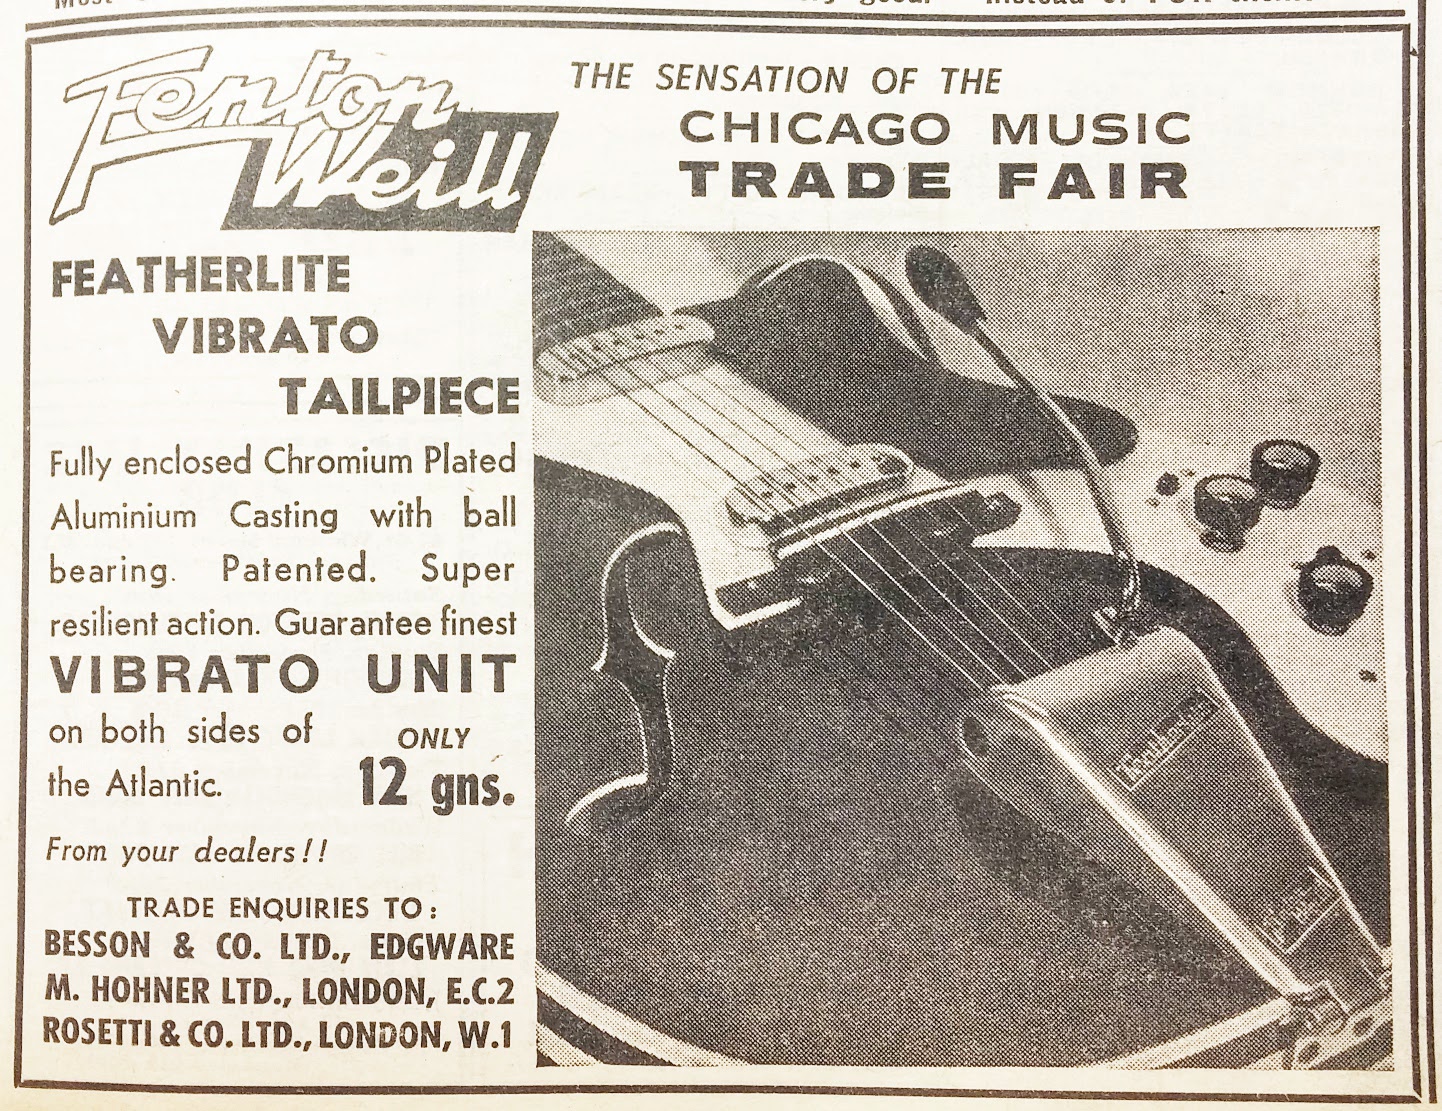 1961 Fenton-Weill Featherlite Vibrato units